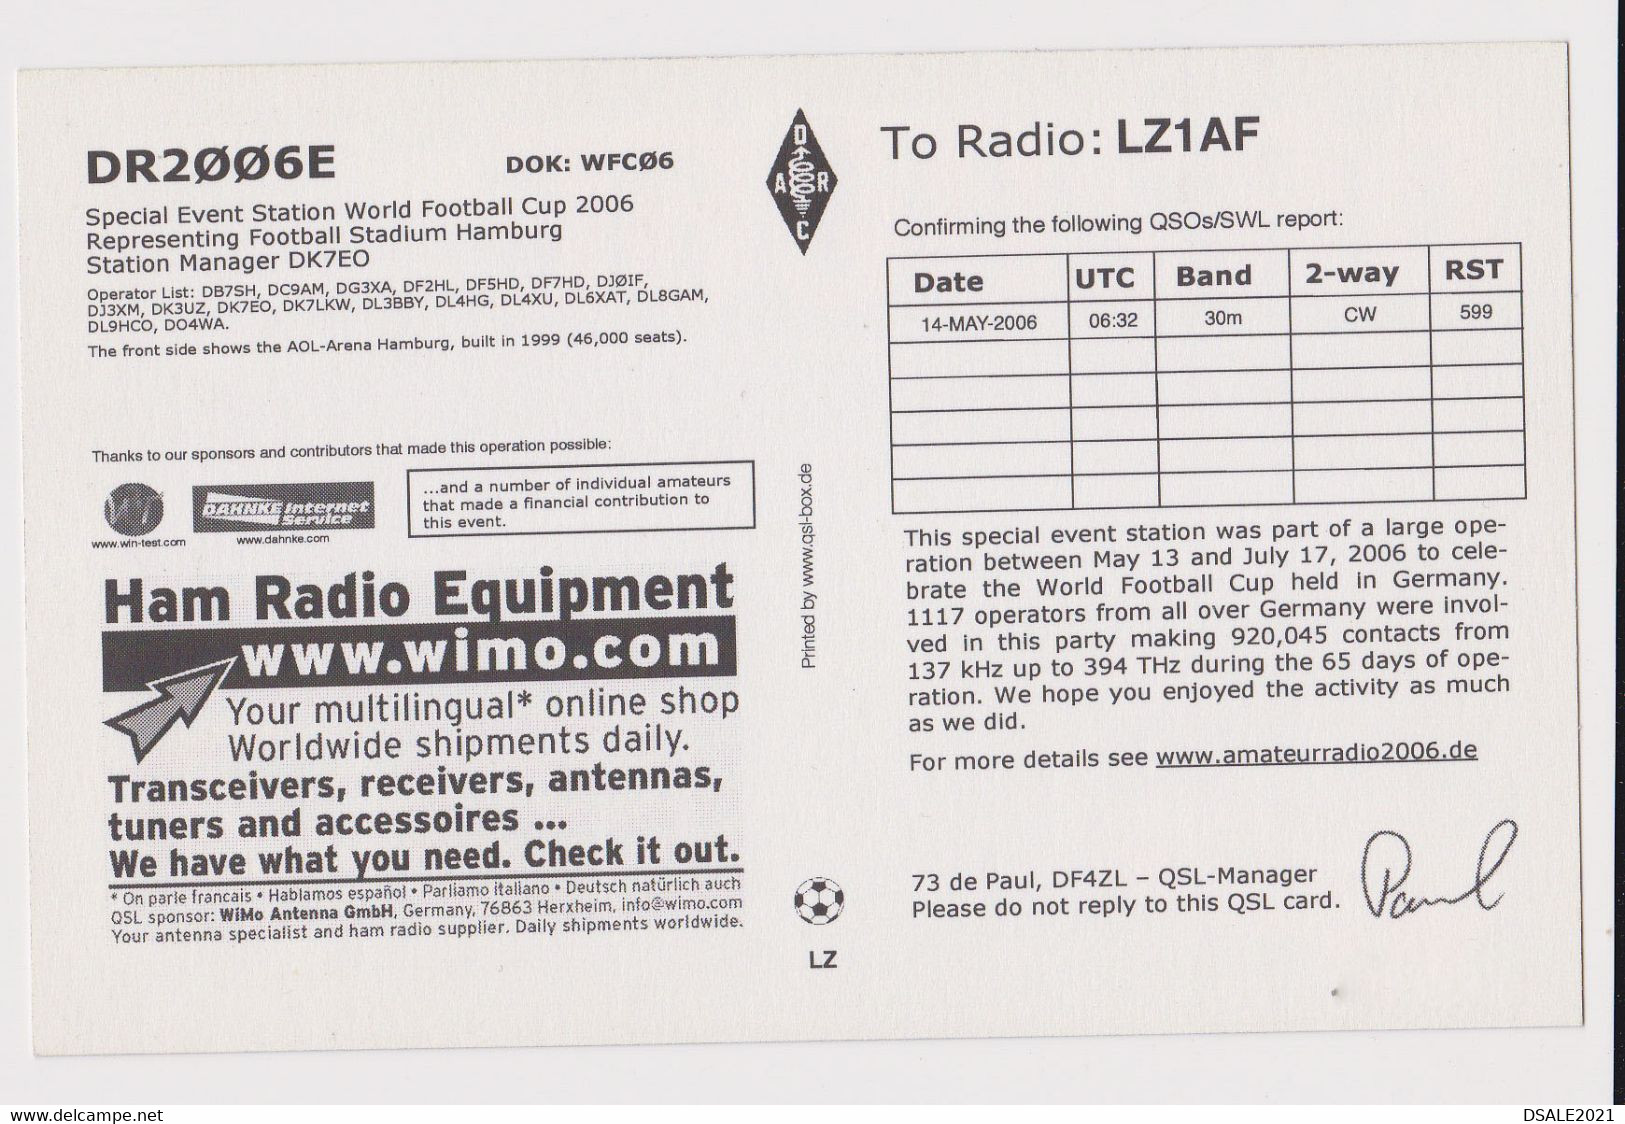 AOL Arena Stadium Hamburg, Germany 2006 FIFA World Cup HAM Radio QSL Card DR2006E To Bulgaria (48307) - Radio Amateur